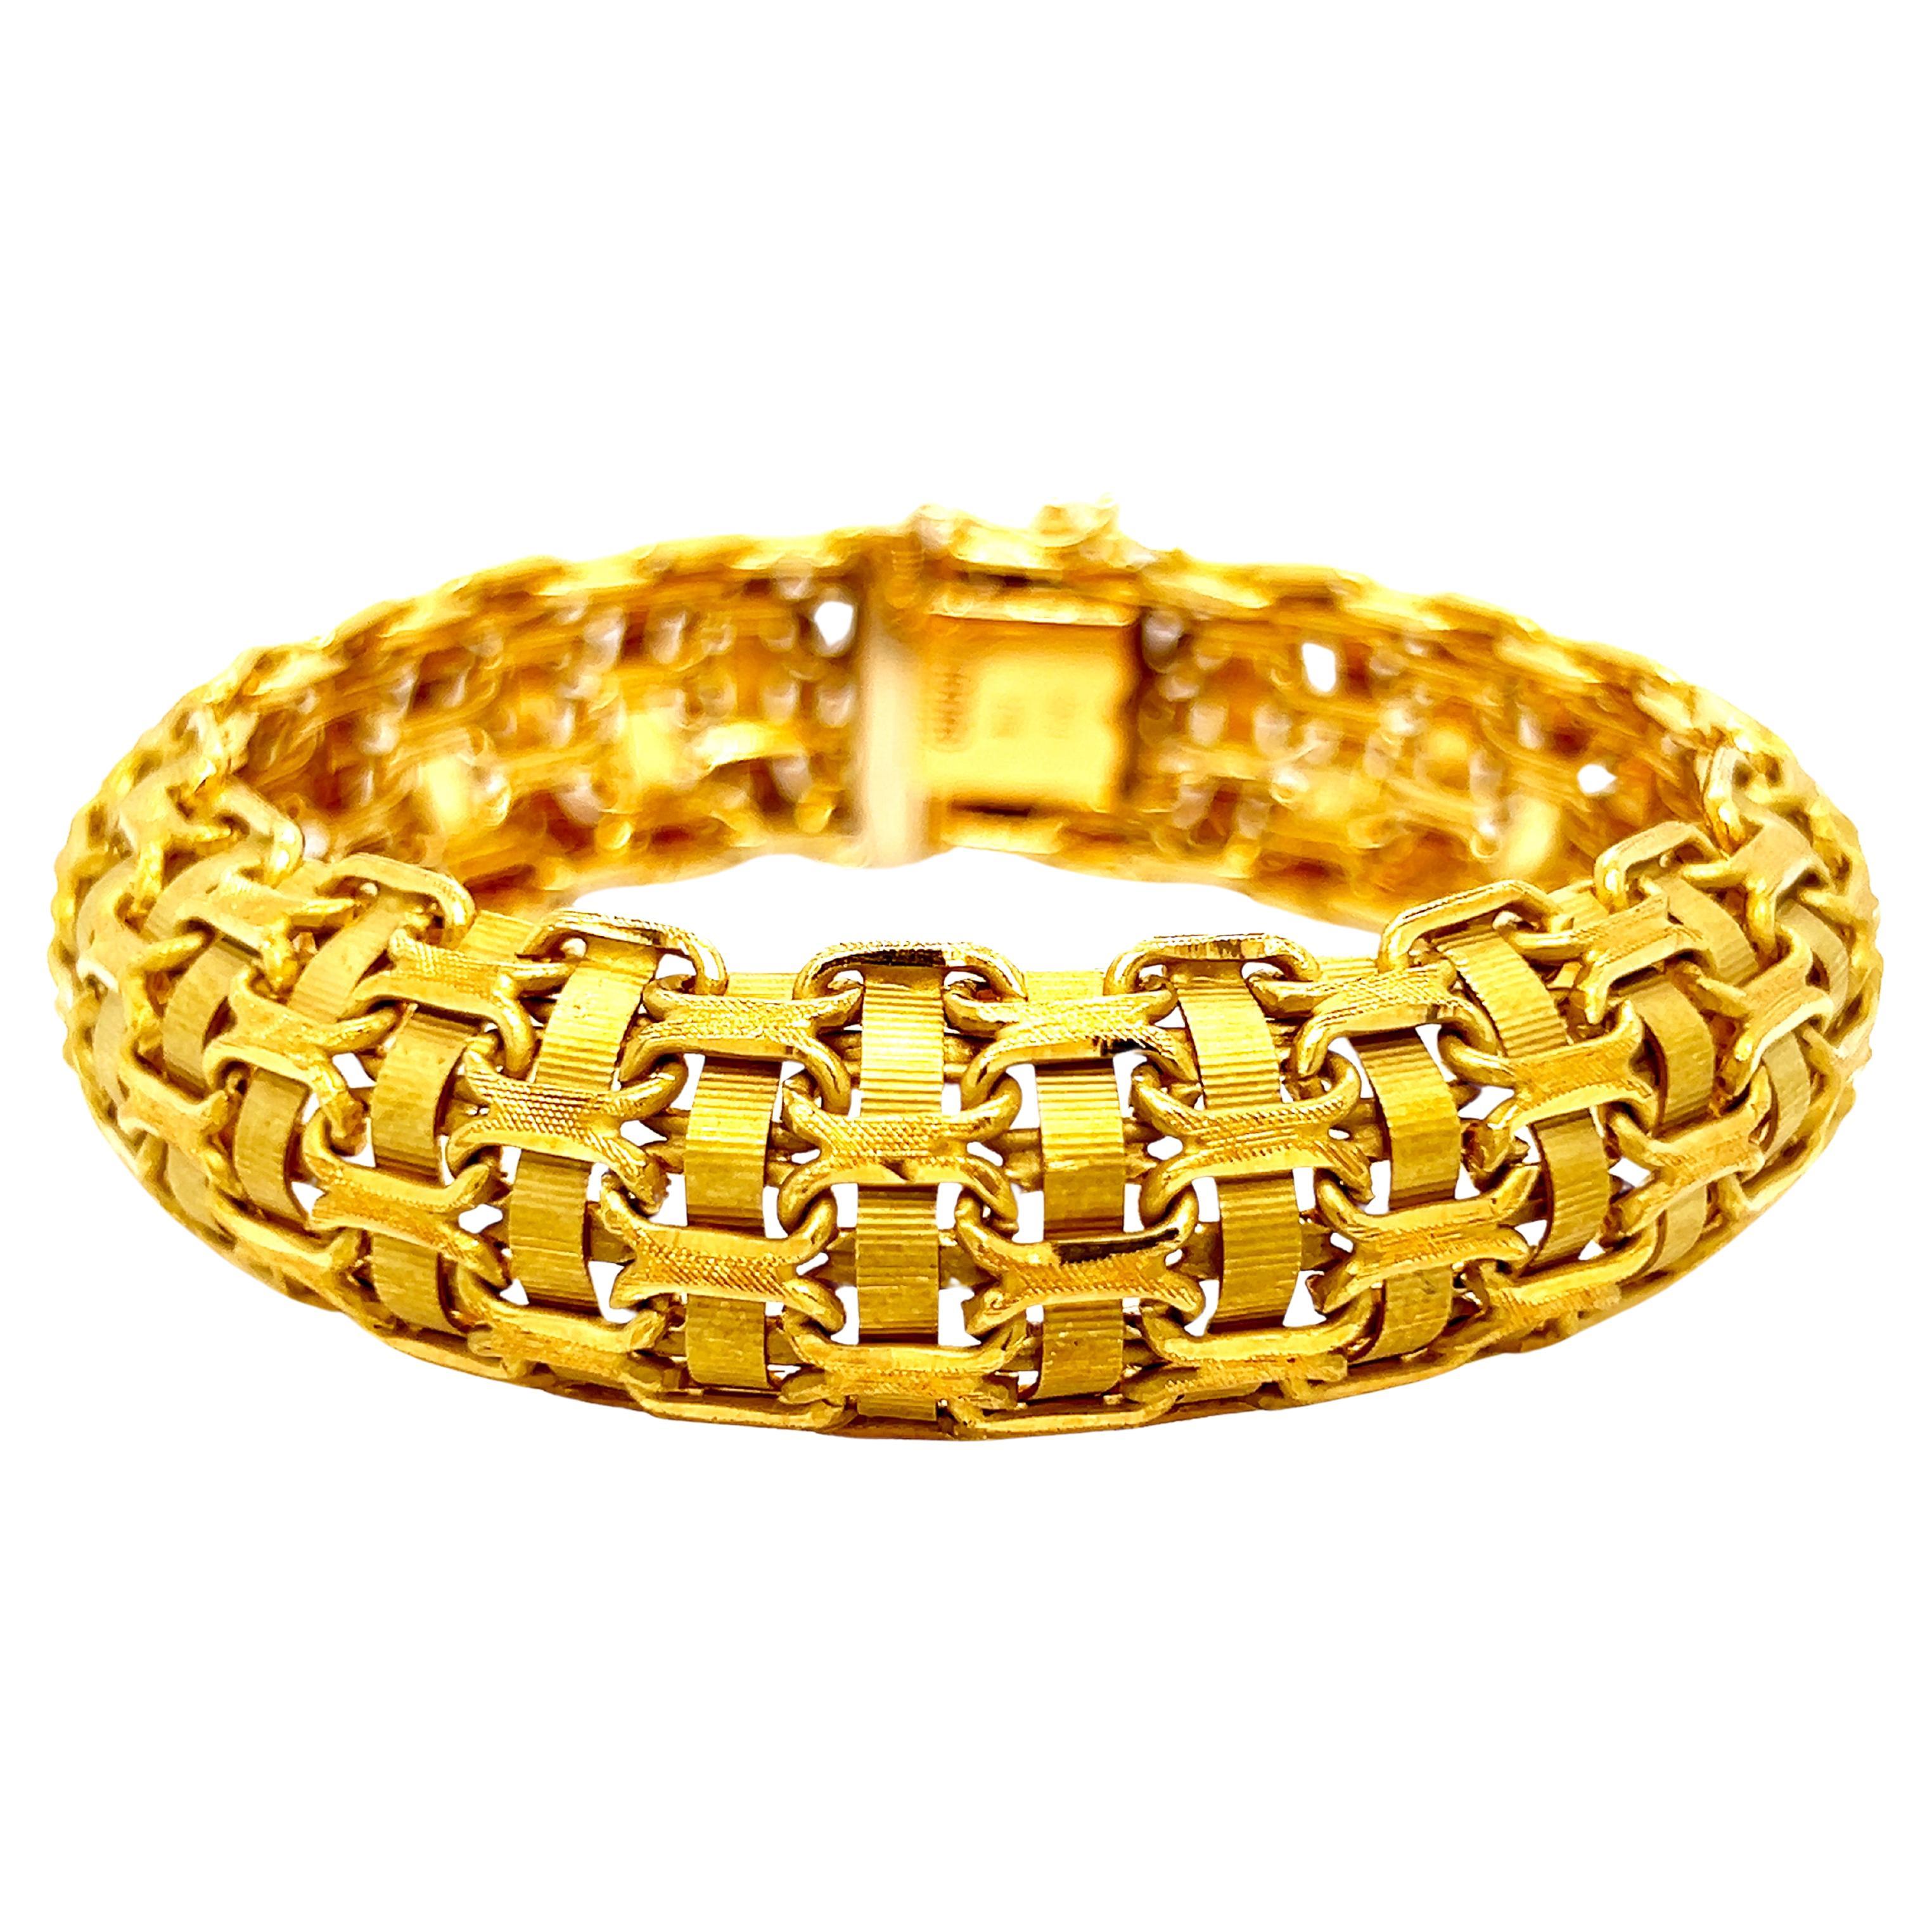 Original 1973 Gucci New York 18Kt Yellow Gold Bangle Bracelet For Sale